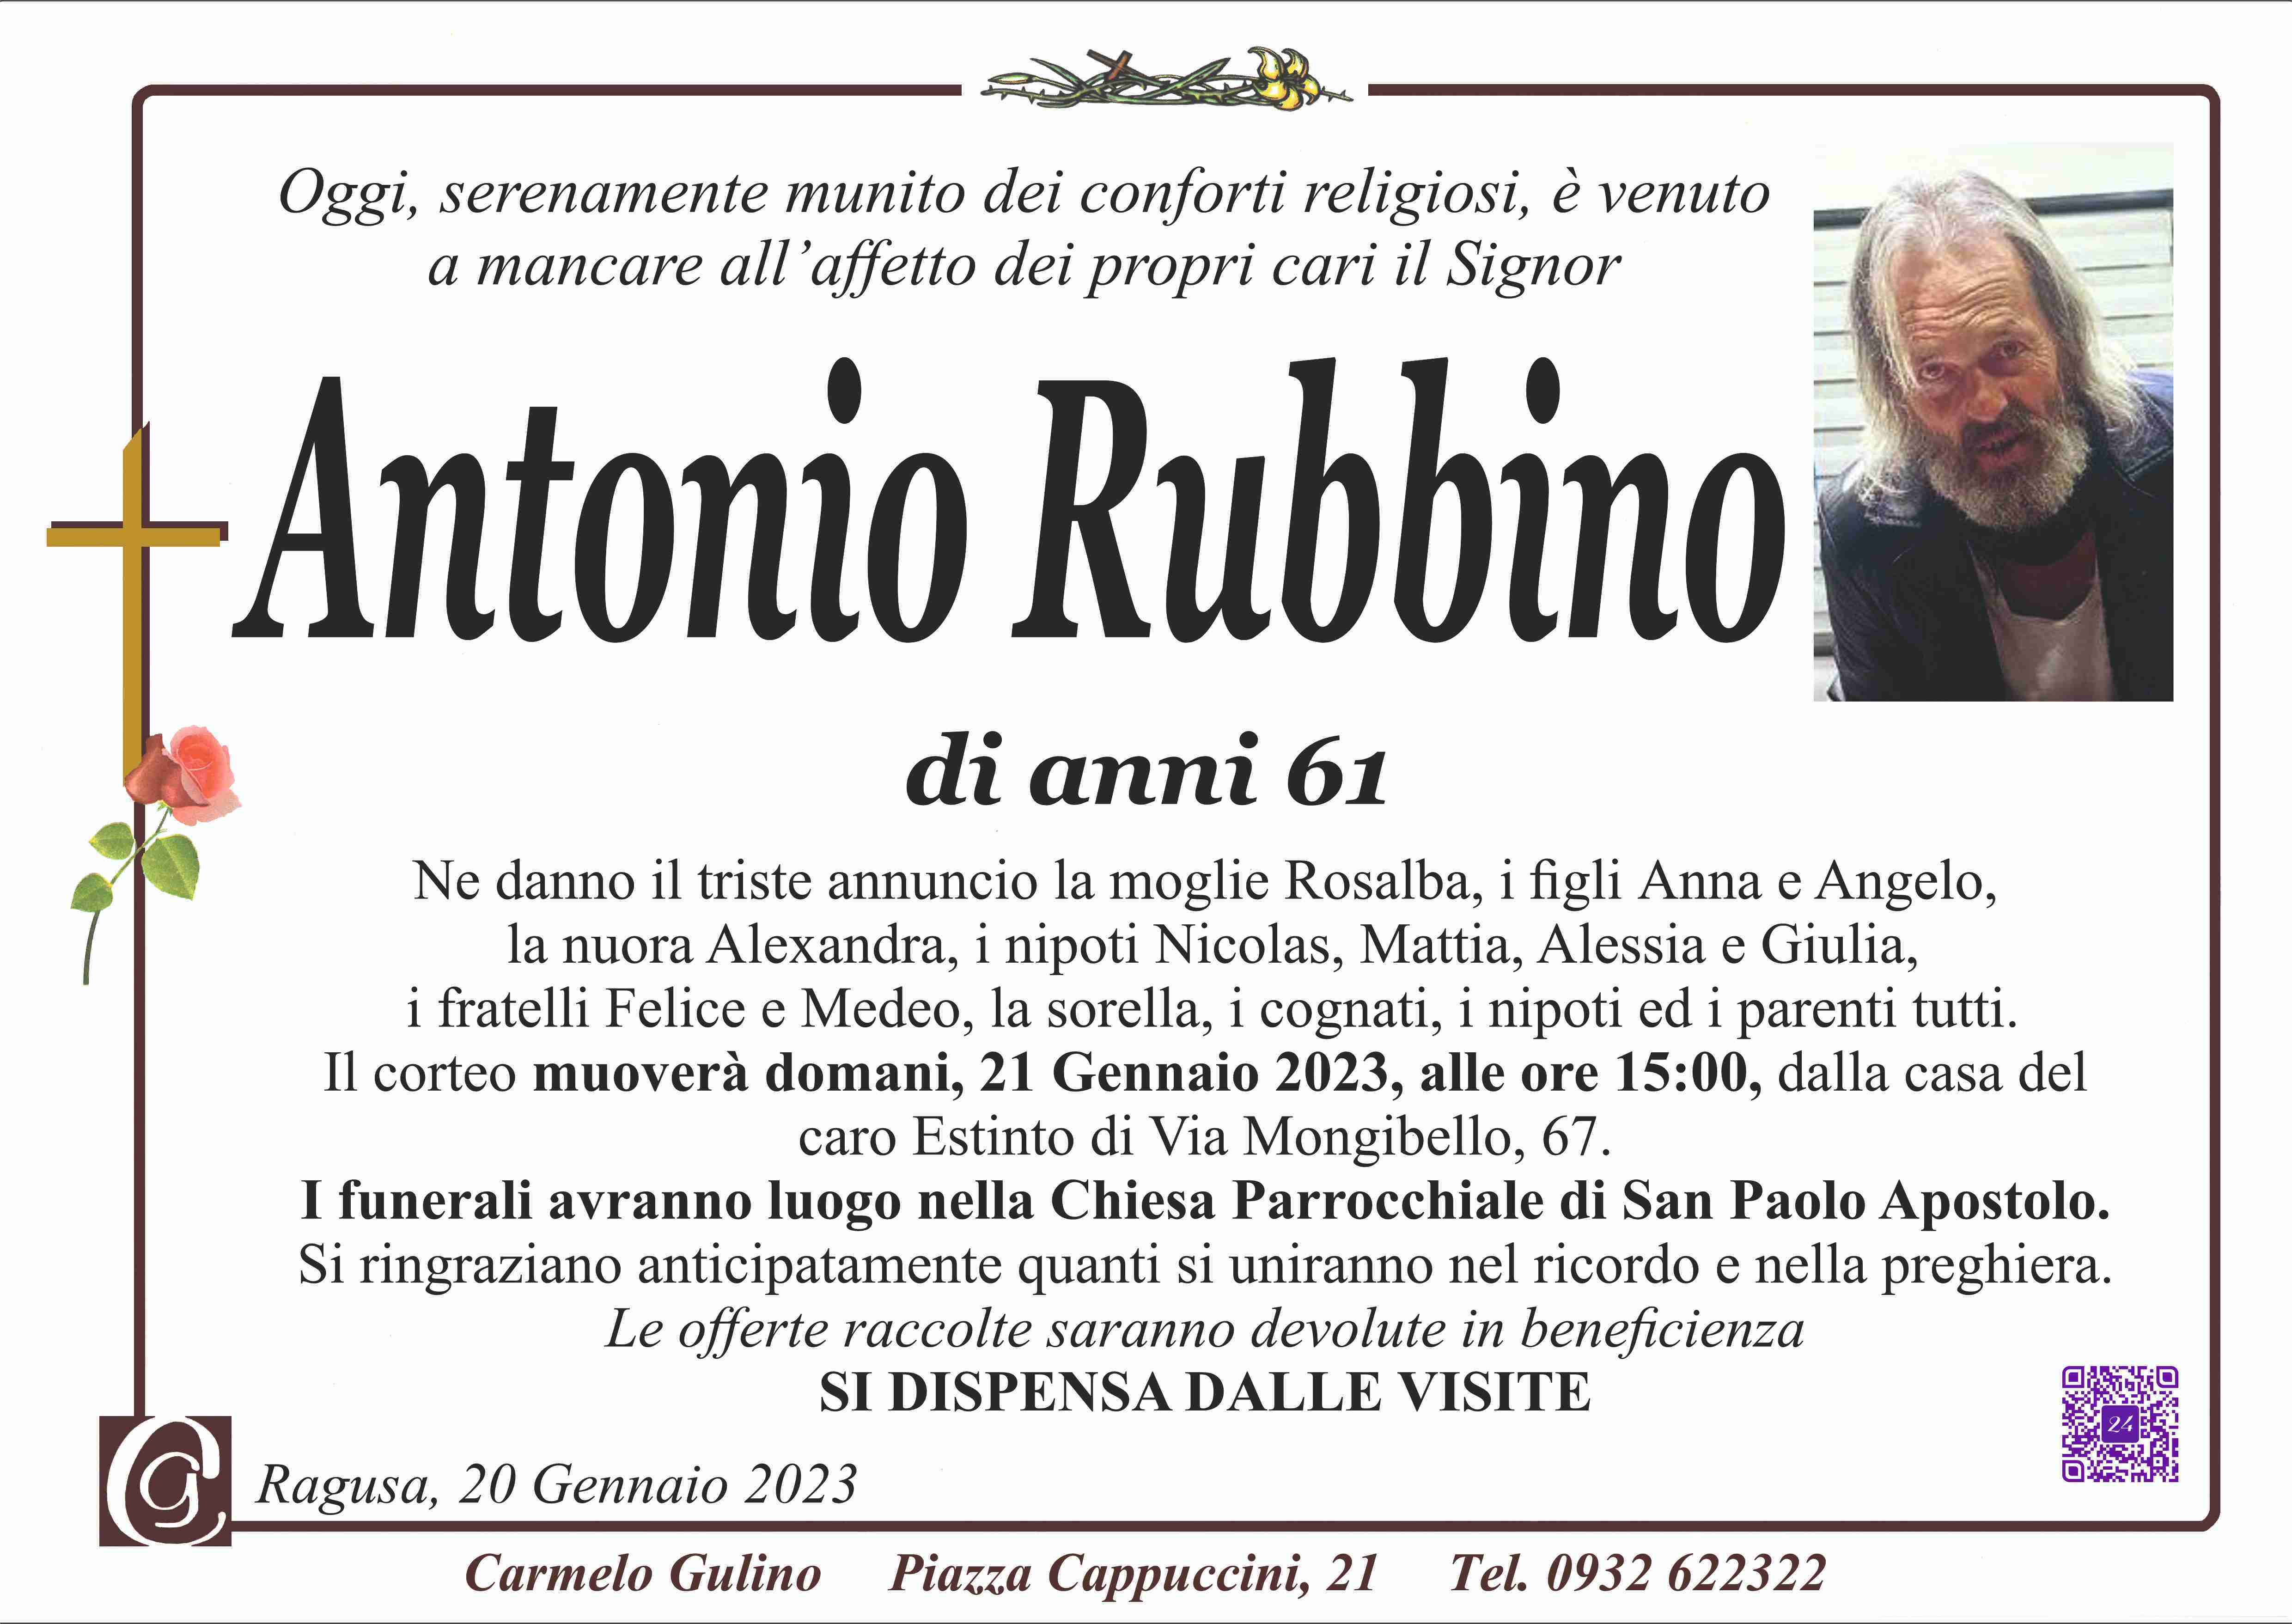 Antonio Rubbino